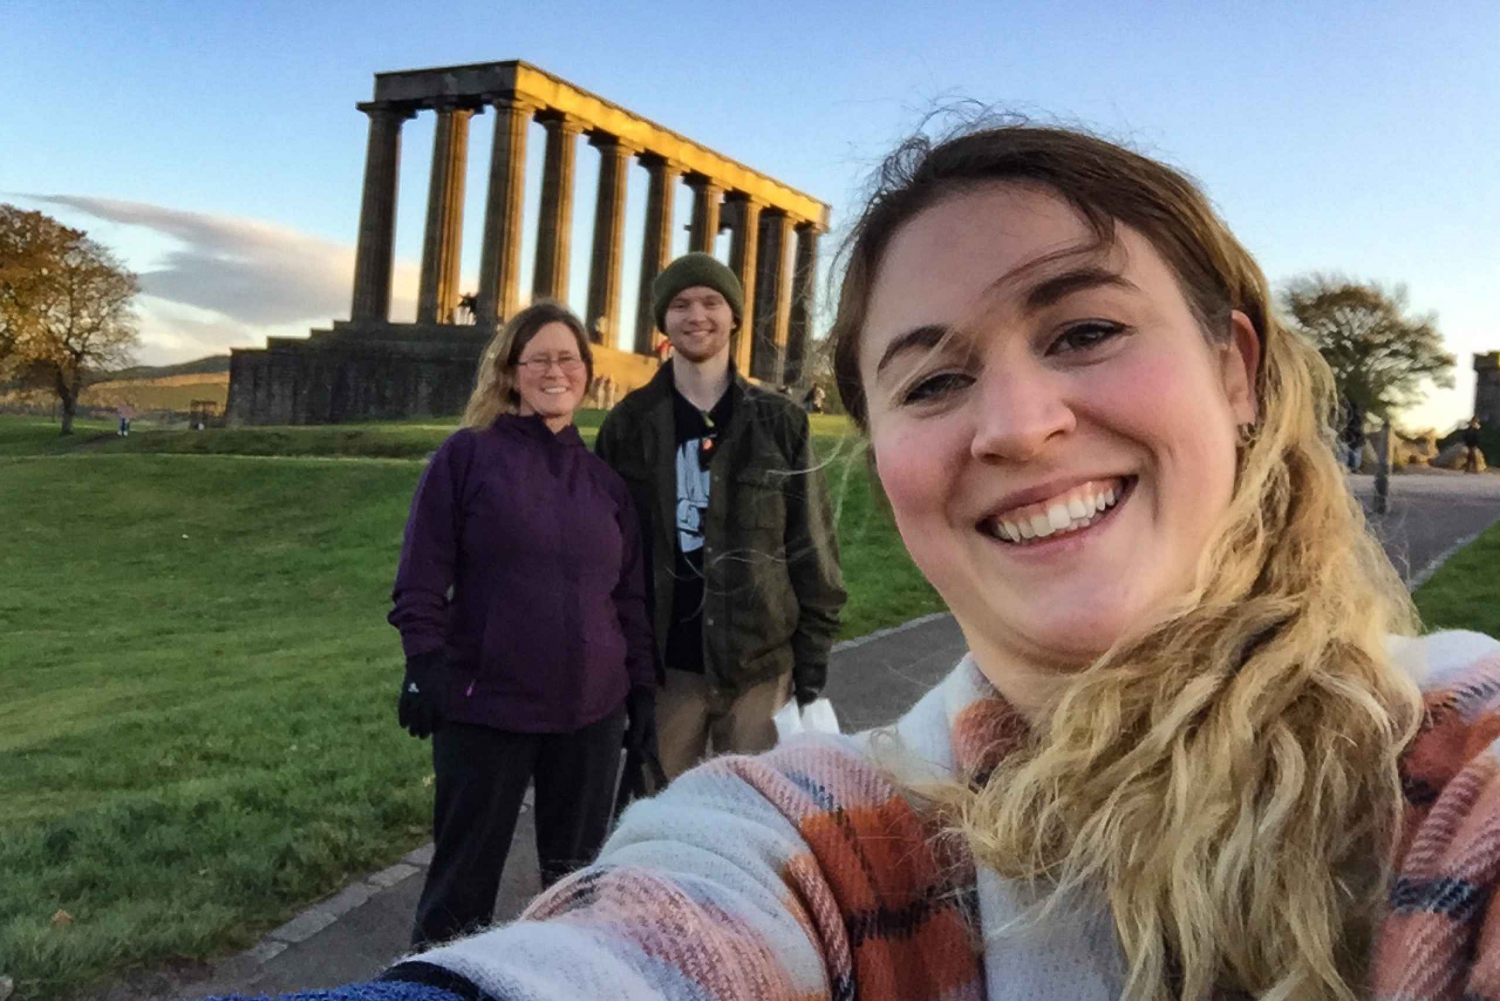 Edinburgh: Child-Friendly Tour with a Local Friend